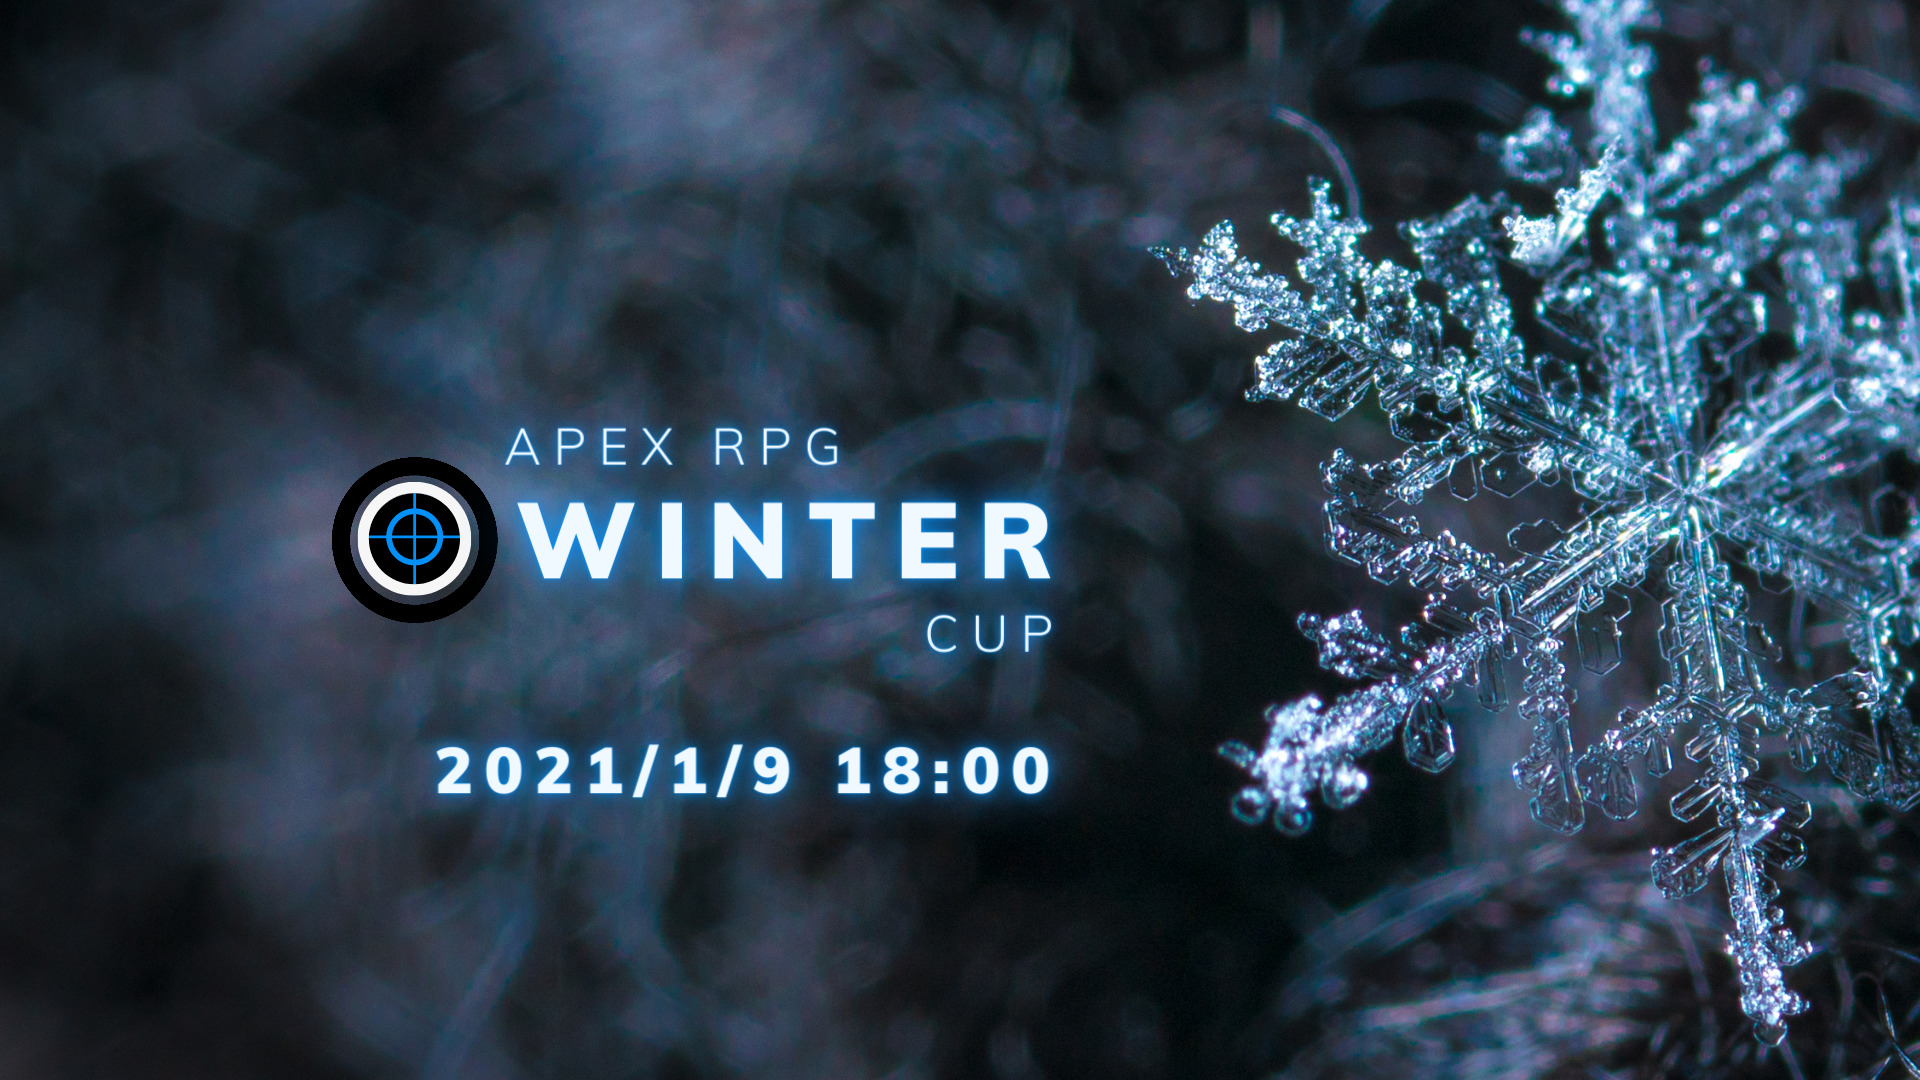 Apex Legens Apex Rpg Winter Cupが1月9日 土 に開催 プロも招待される商品付きカスタムマッチを楽しもう